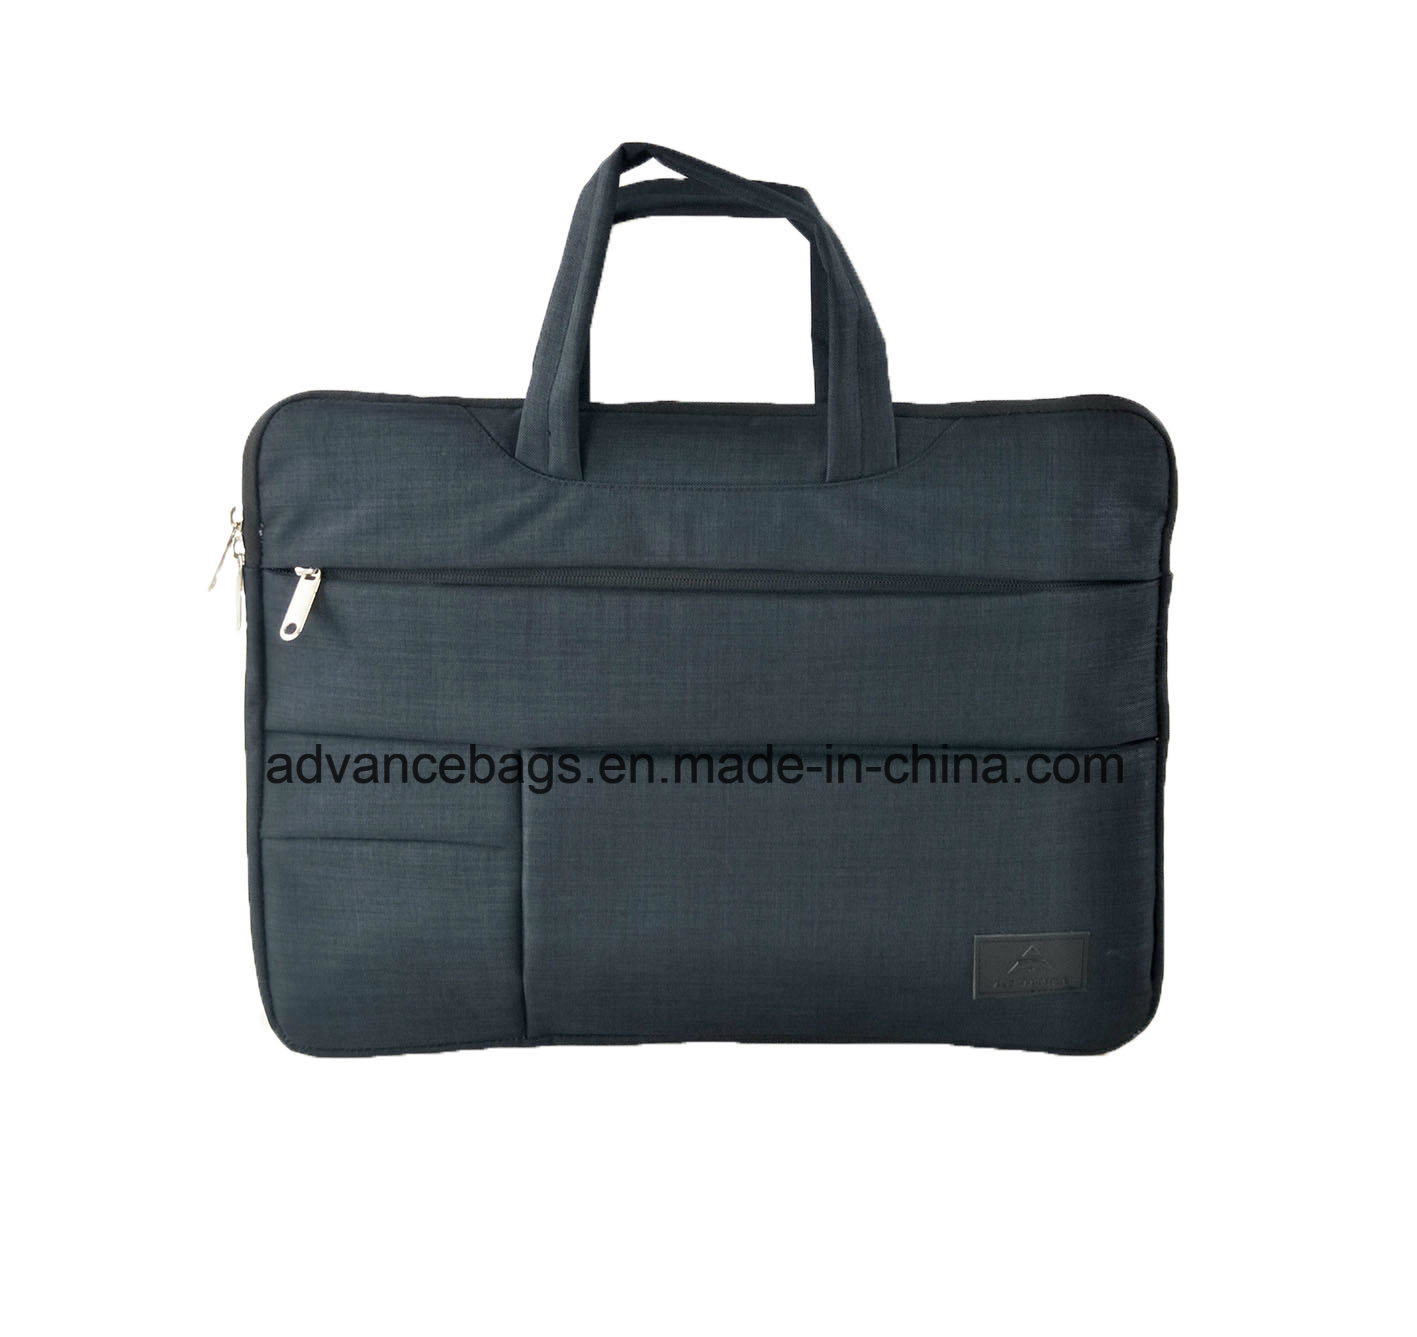 Fashionable Laptop iPad Document Business Bag